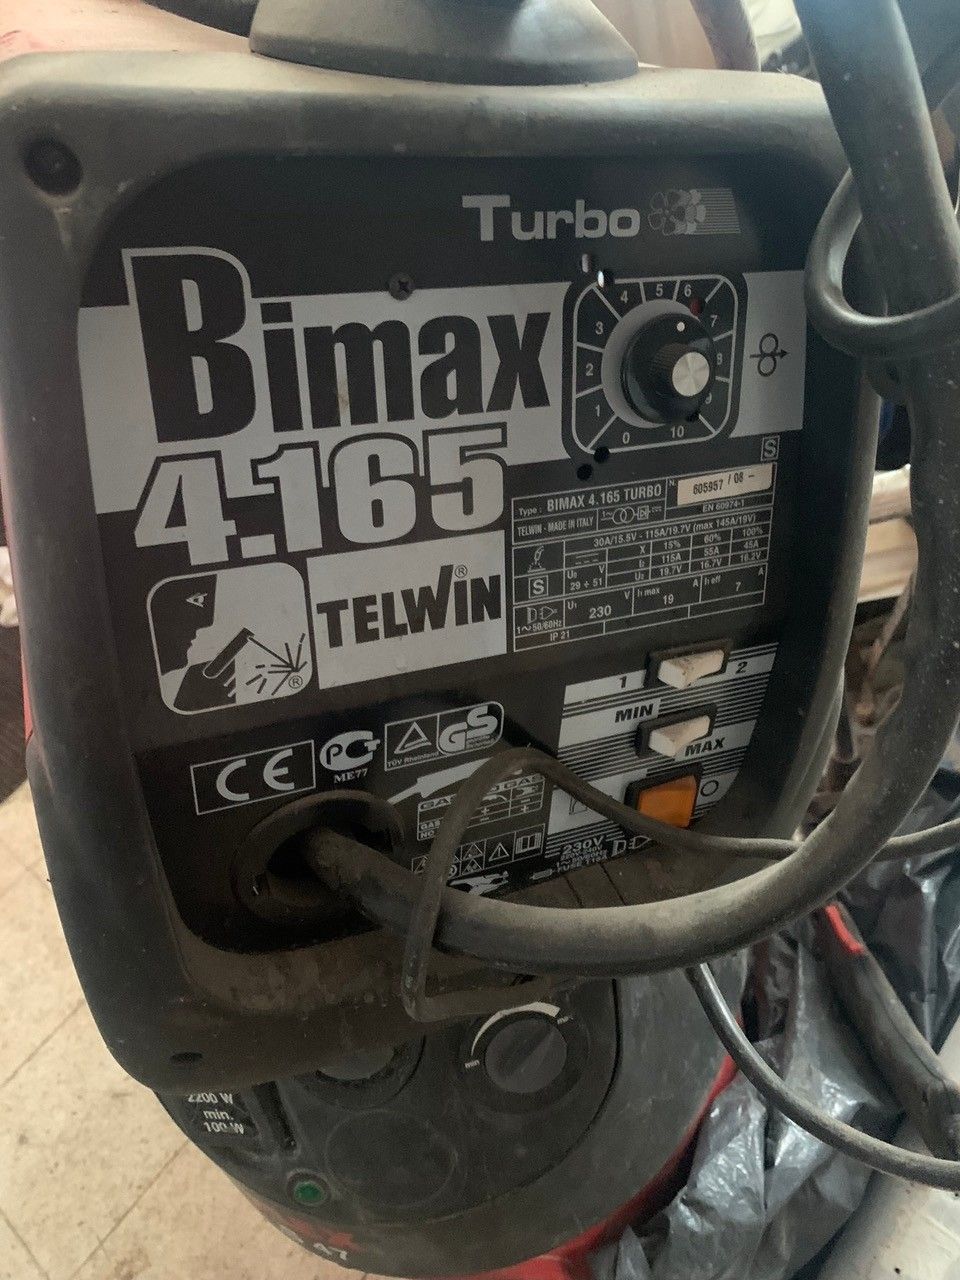 Hitsauskone Telwin welding Bimax 4,165 Turbo Mig - Mag